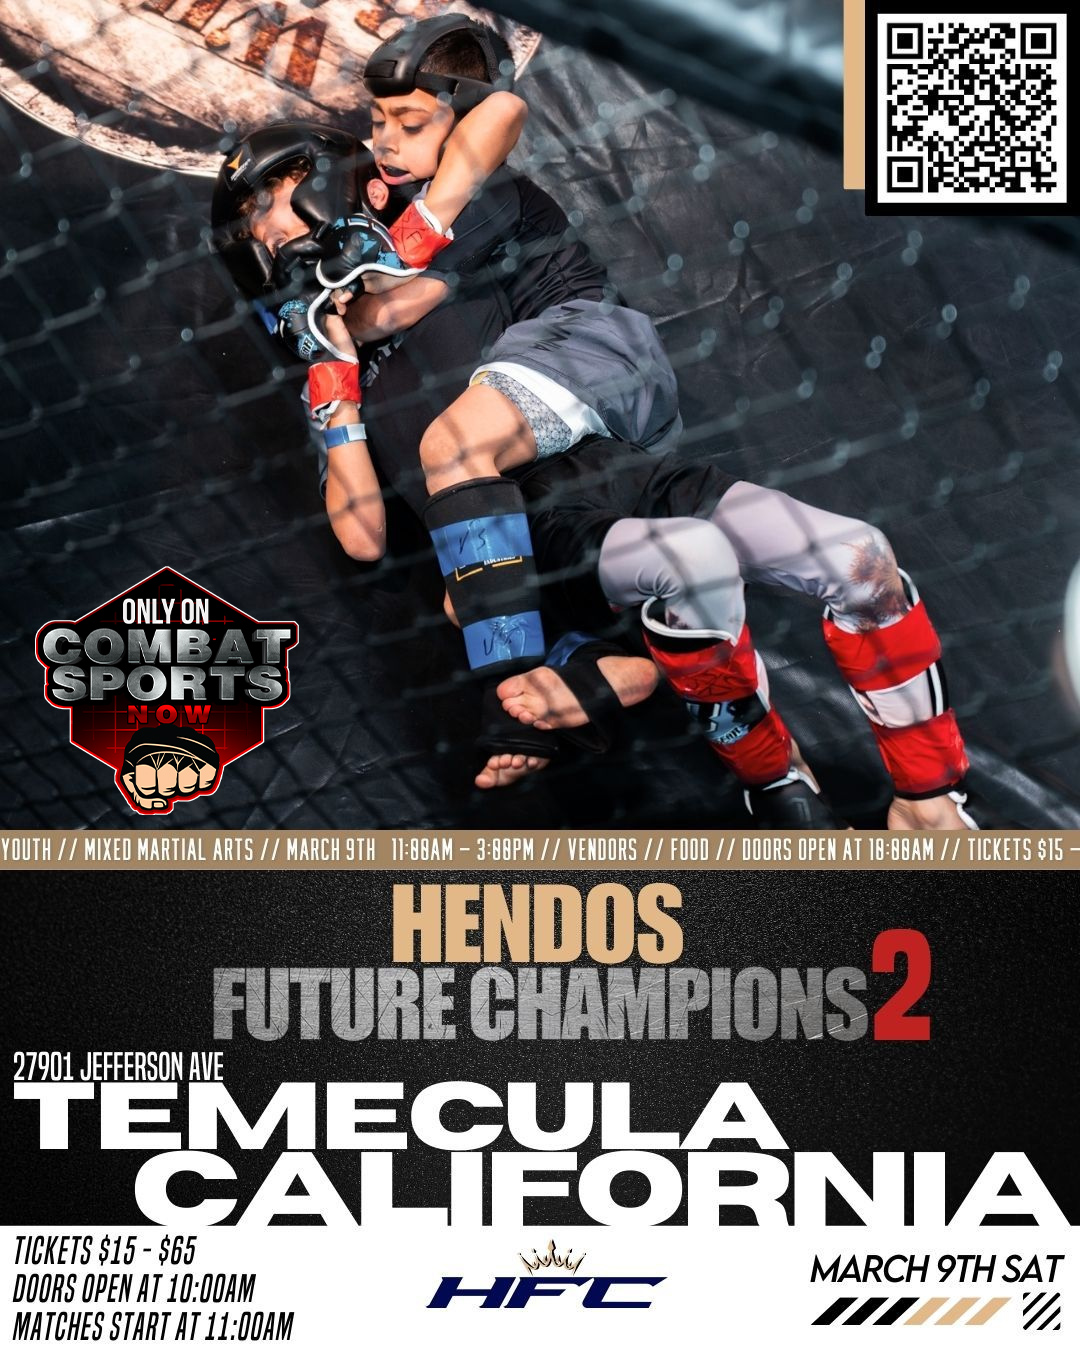 Hendos Future Champions 2 Live on Combat Sports Now